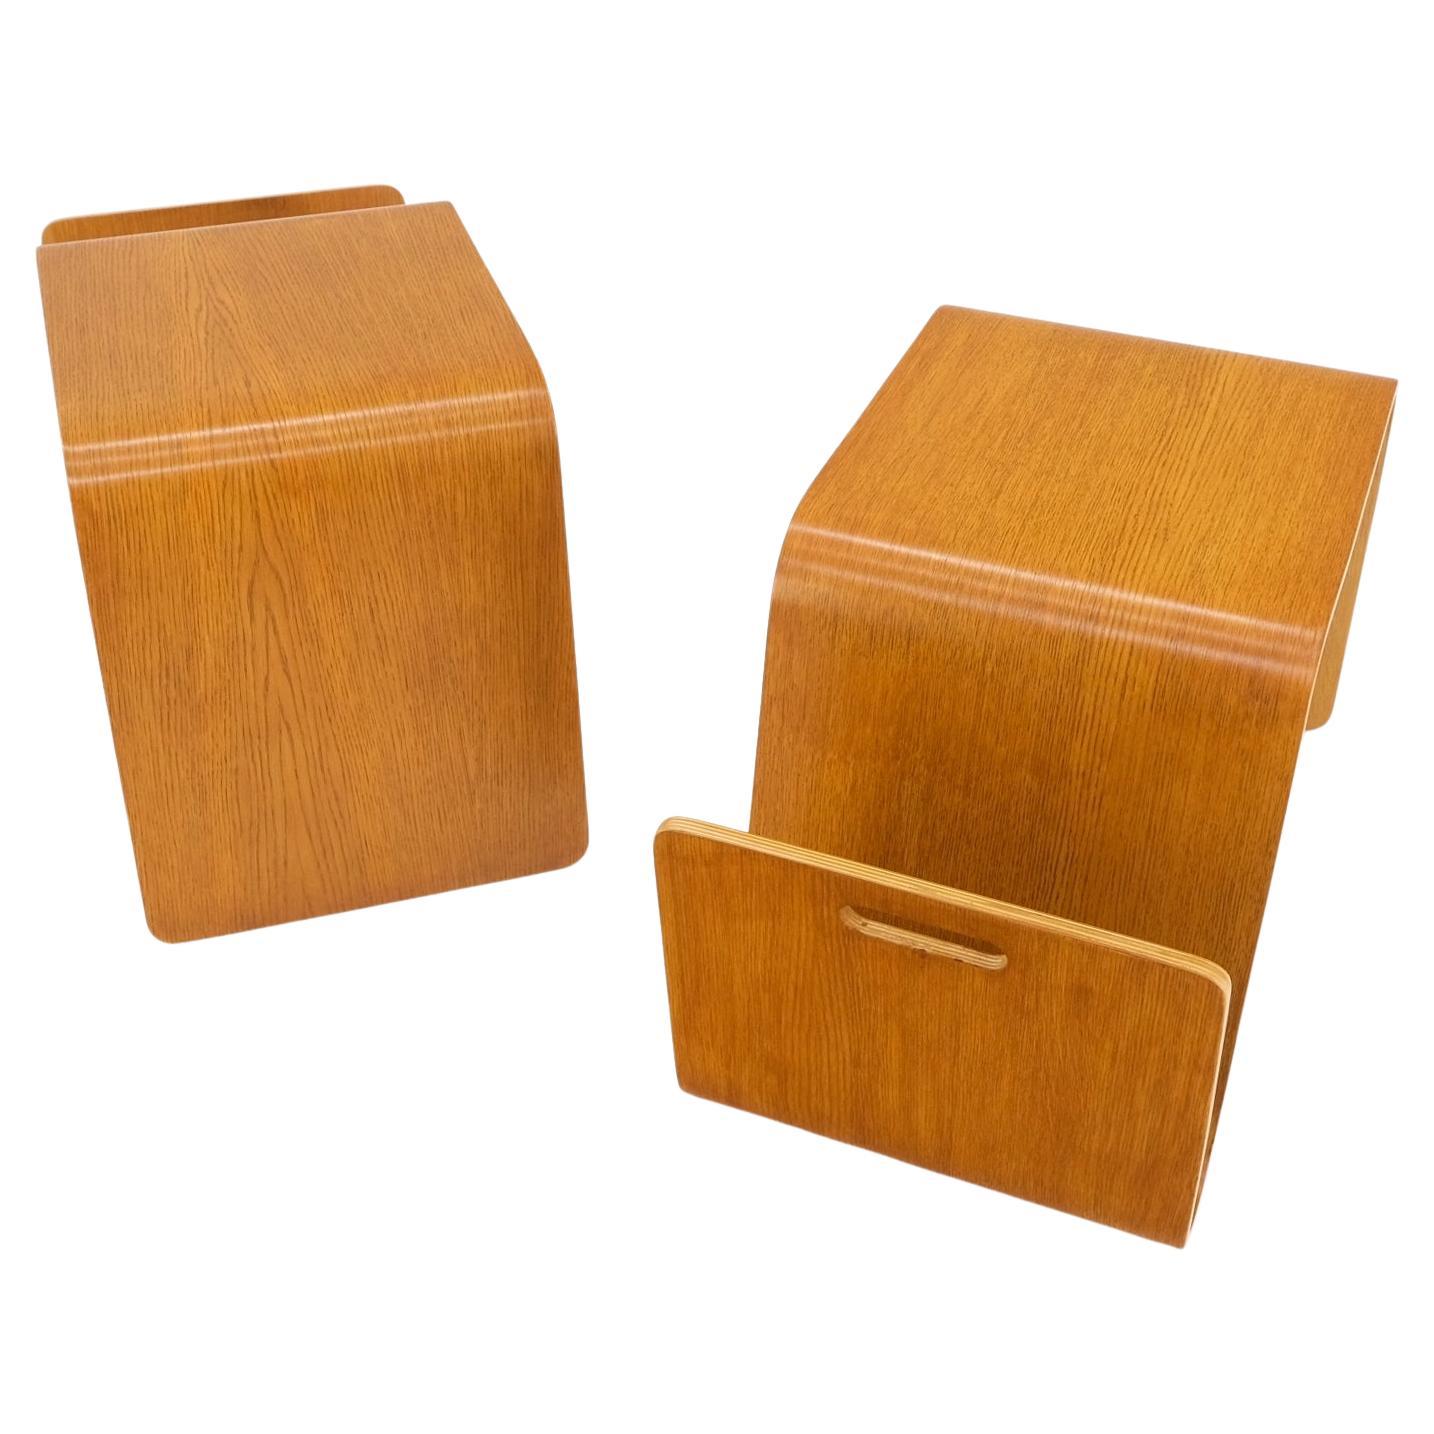 Pair of Mid-Century Modern molded plywood end tables magazine racks mint!
Eames era decor match vintage plywood end tables.